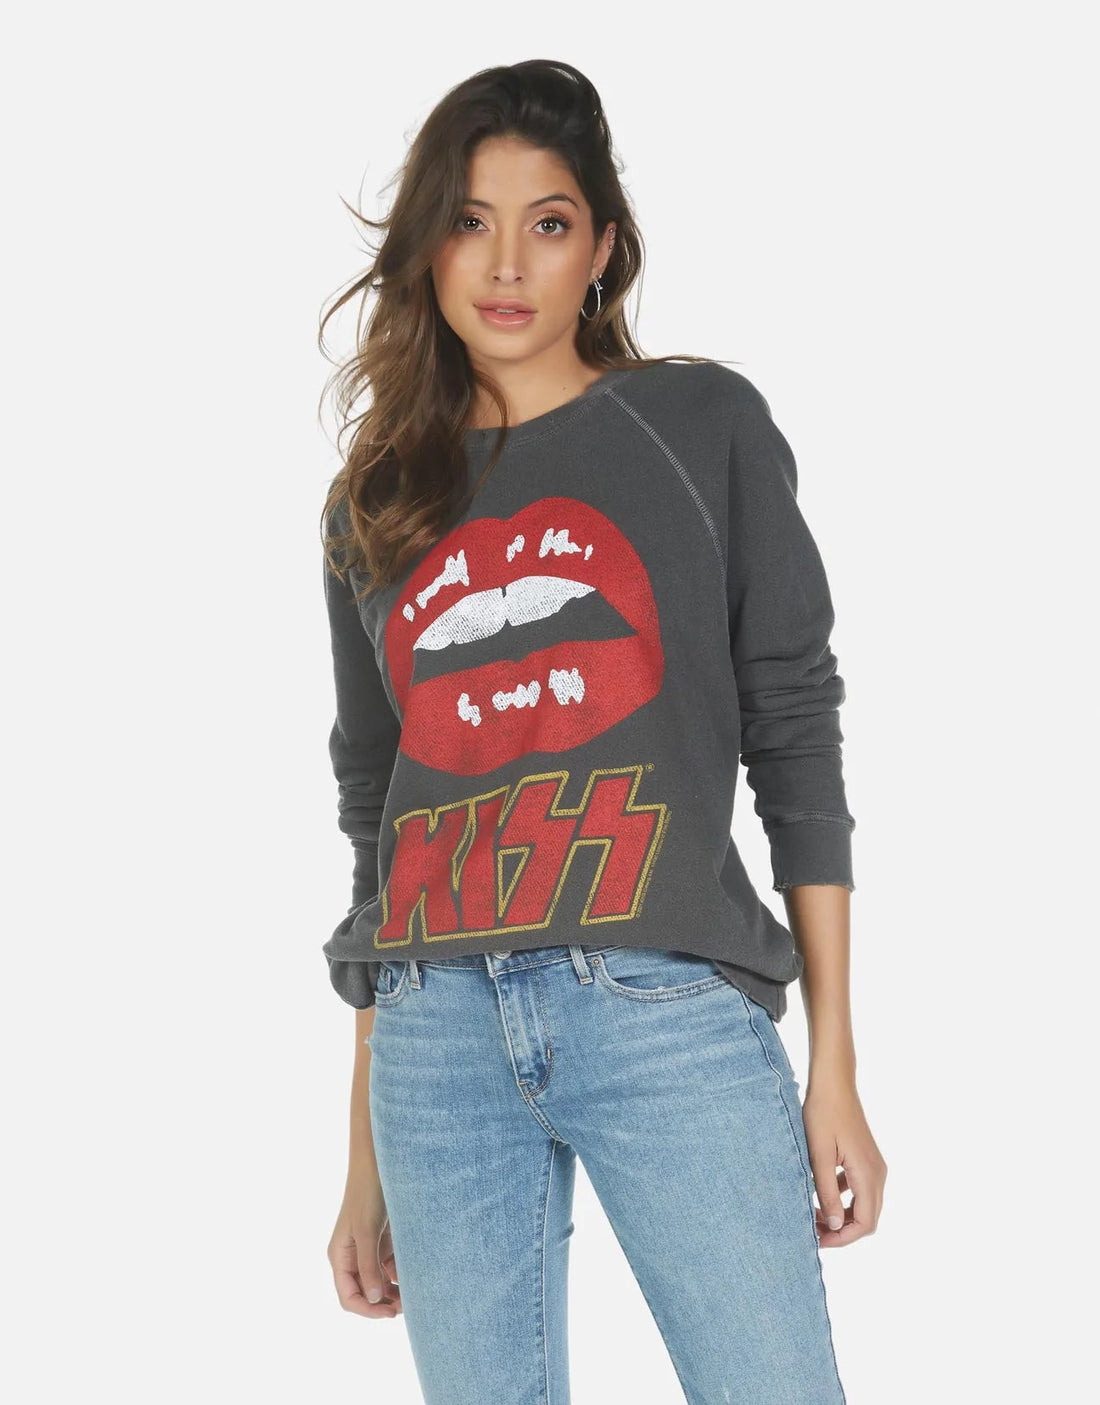 Shop Lauren Moshi Anela KISS Music Band Sweater - Premium Sweater from Lauren Moshi Online now at Spoiled Brat 